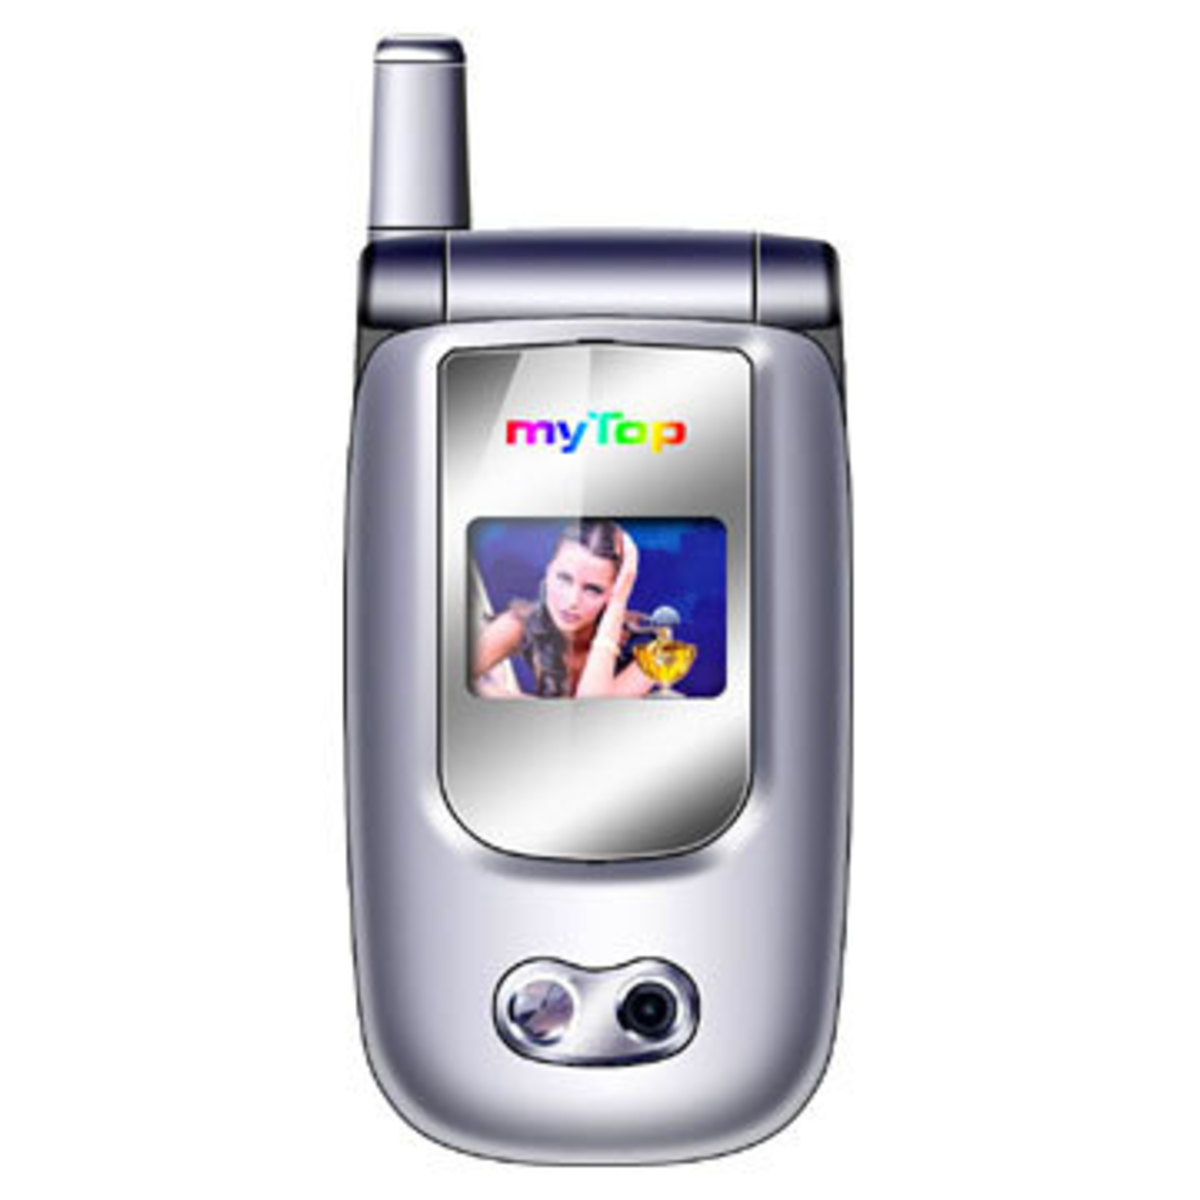 A Modern Mobile Phone